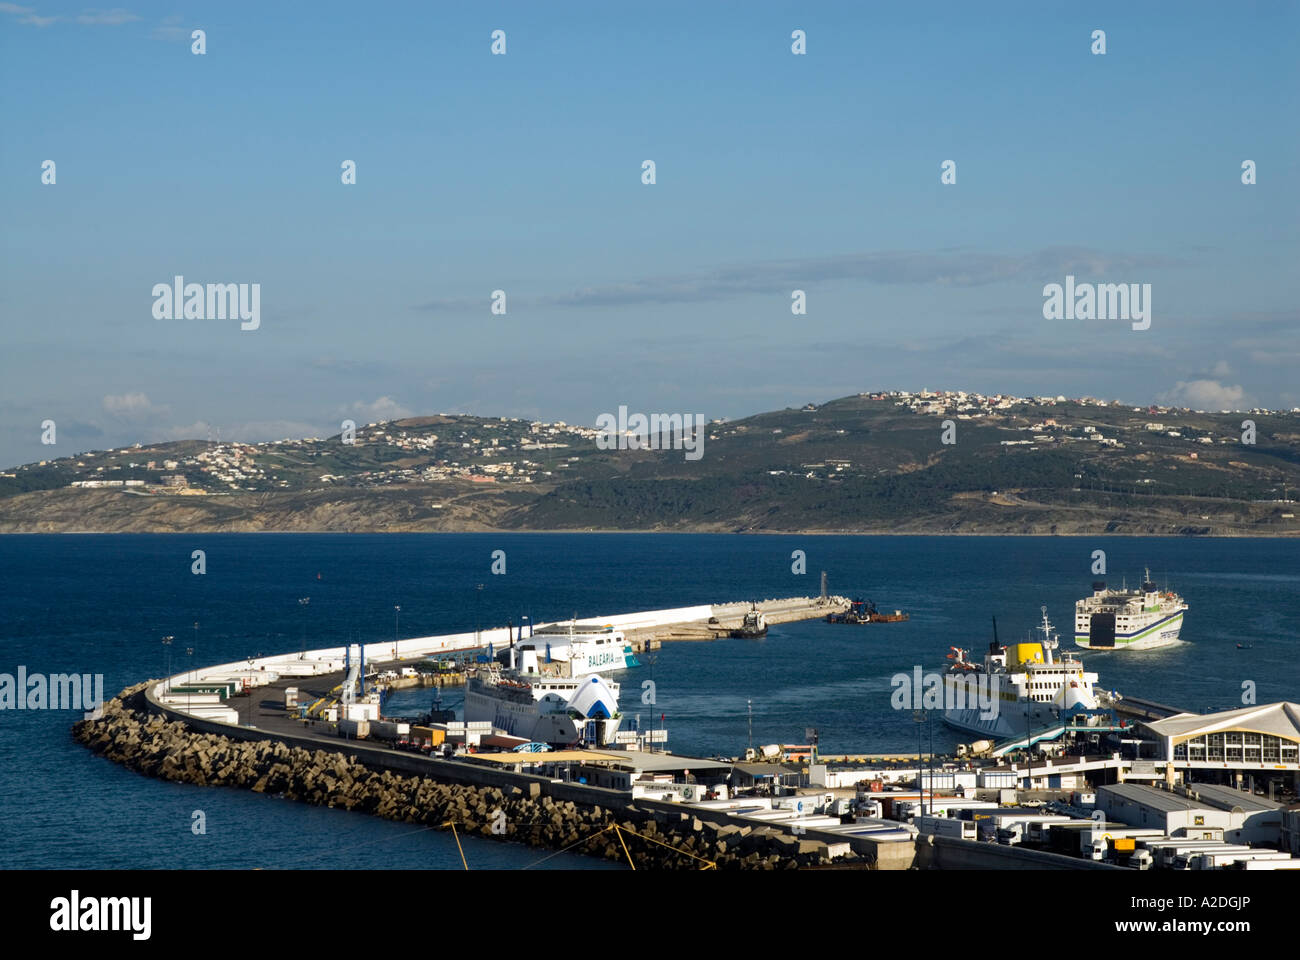 Porto Tangeri, Marocco Foto stock - Alamy